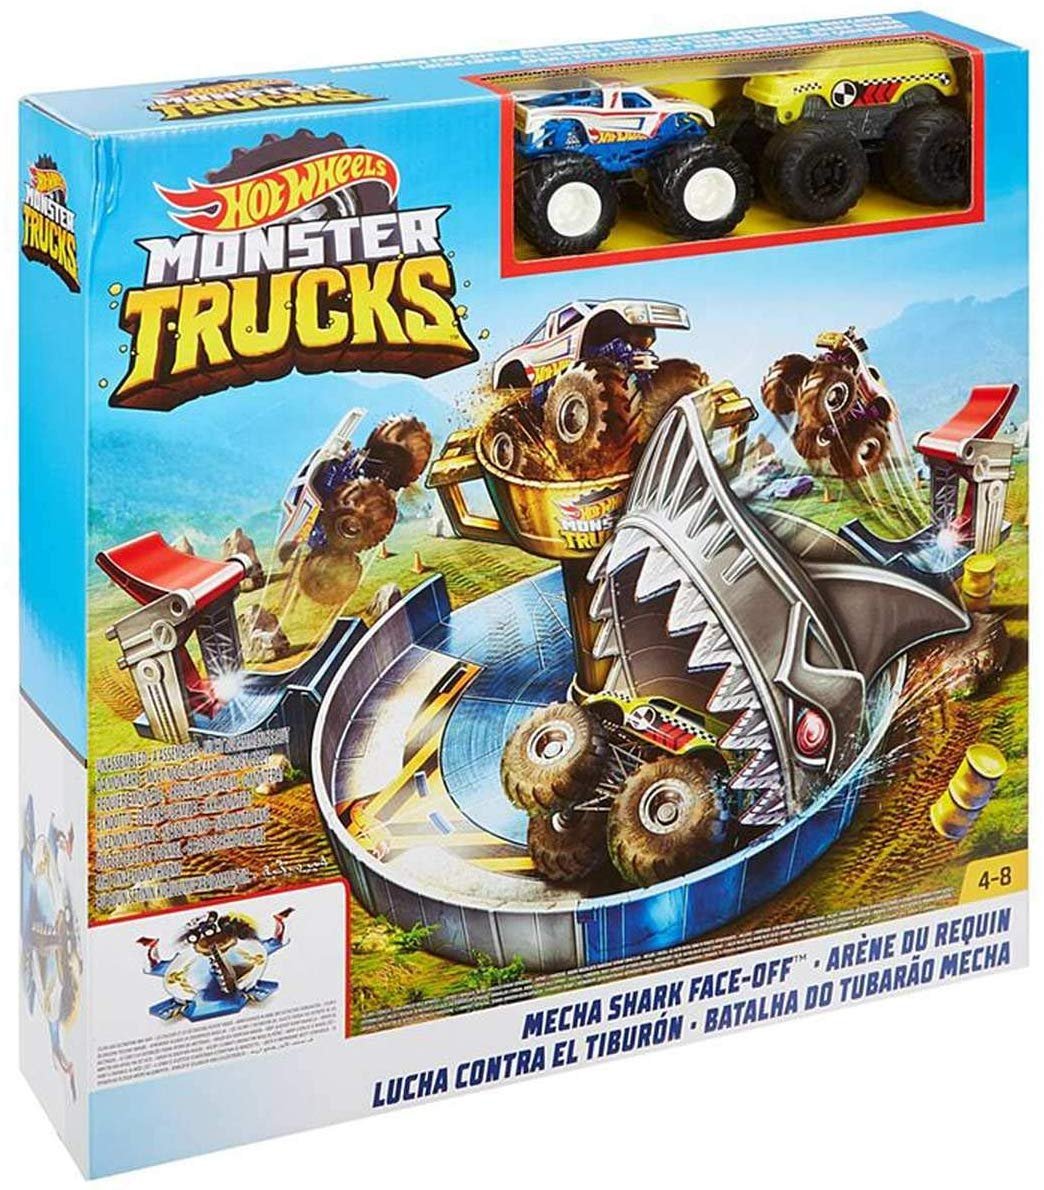 Hot Wheels Monster Trucks Mecha Shark Face-off Playset - image 10 of 11